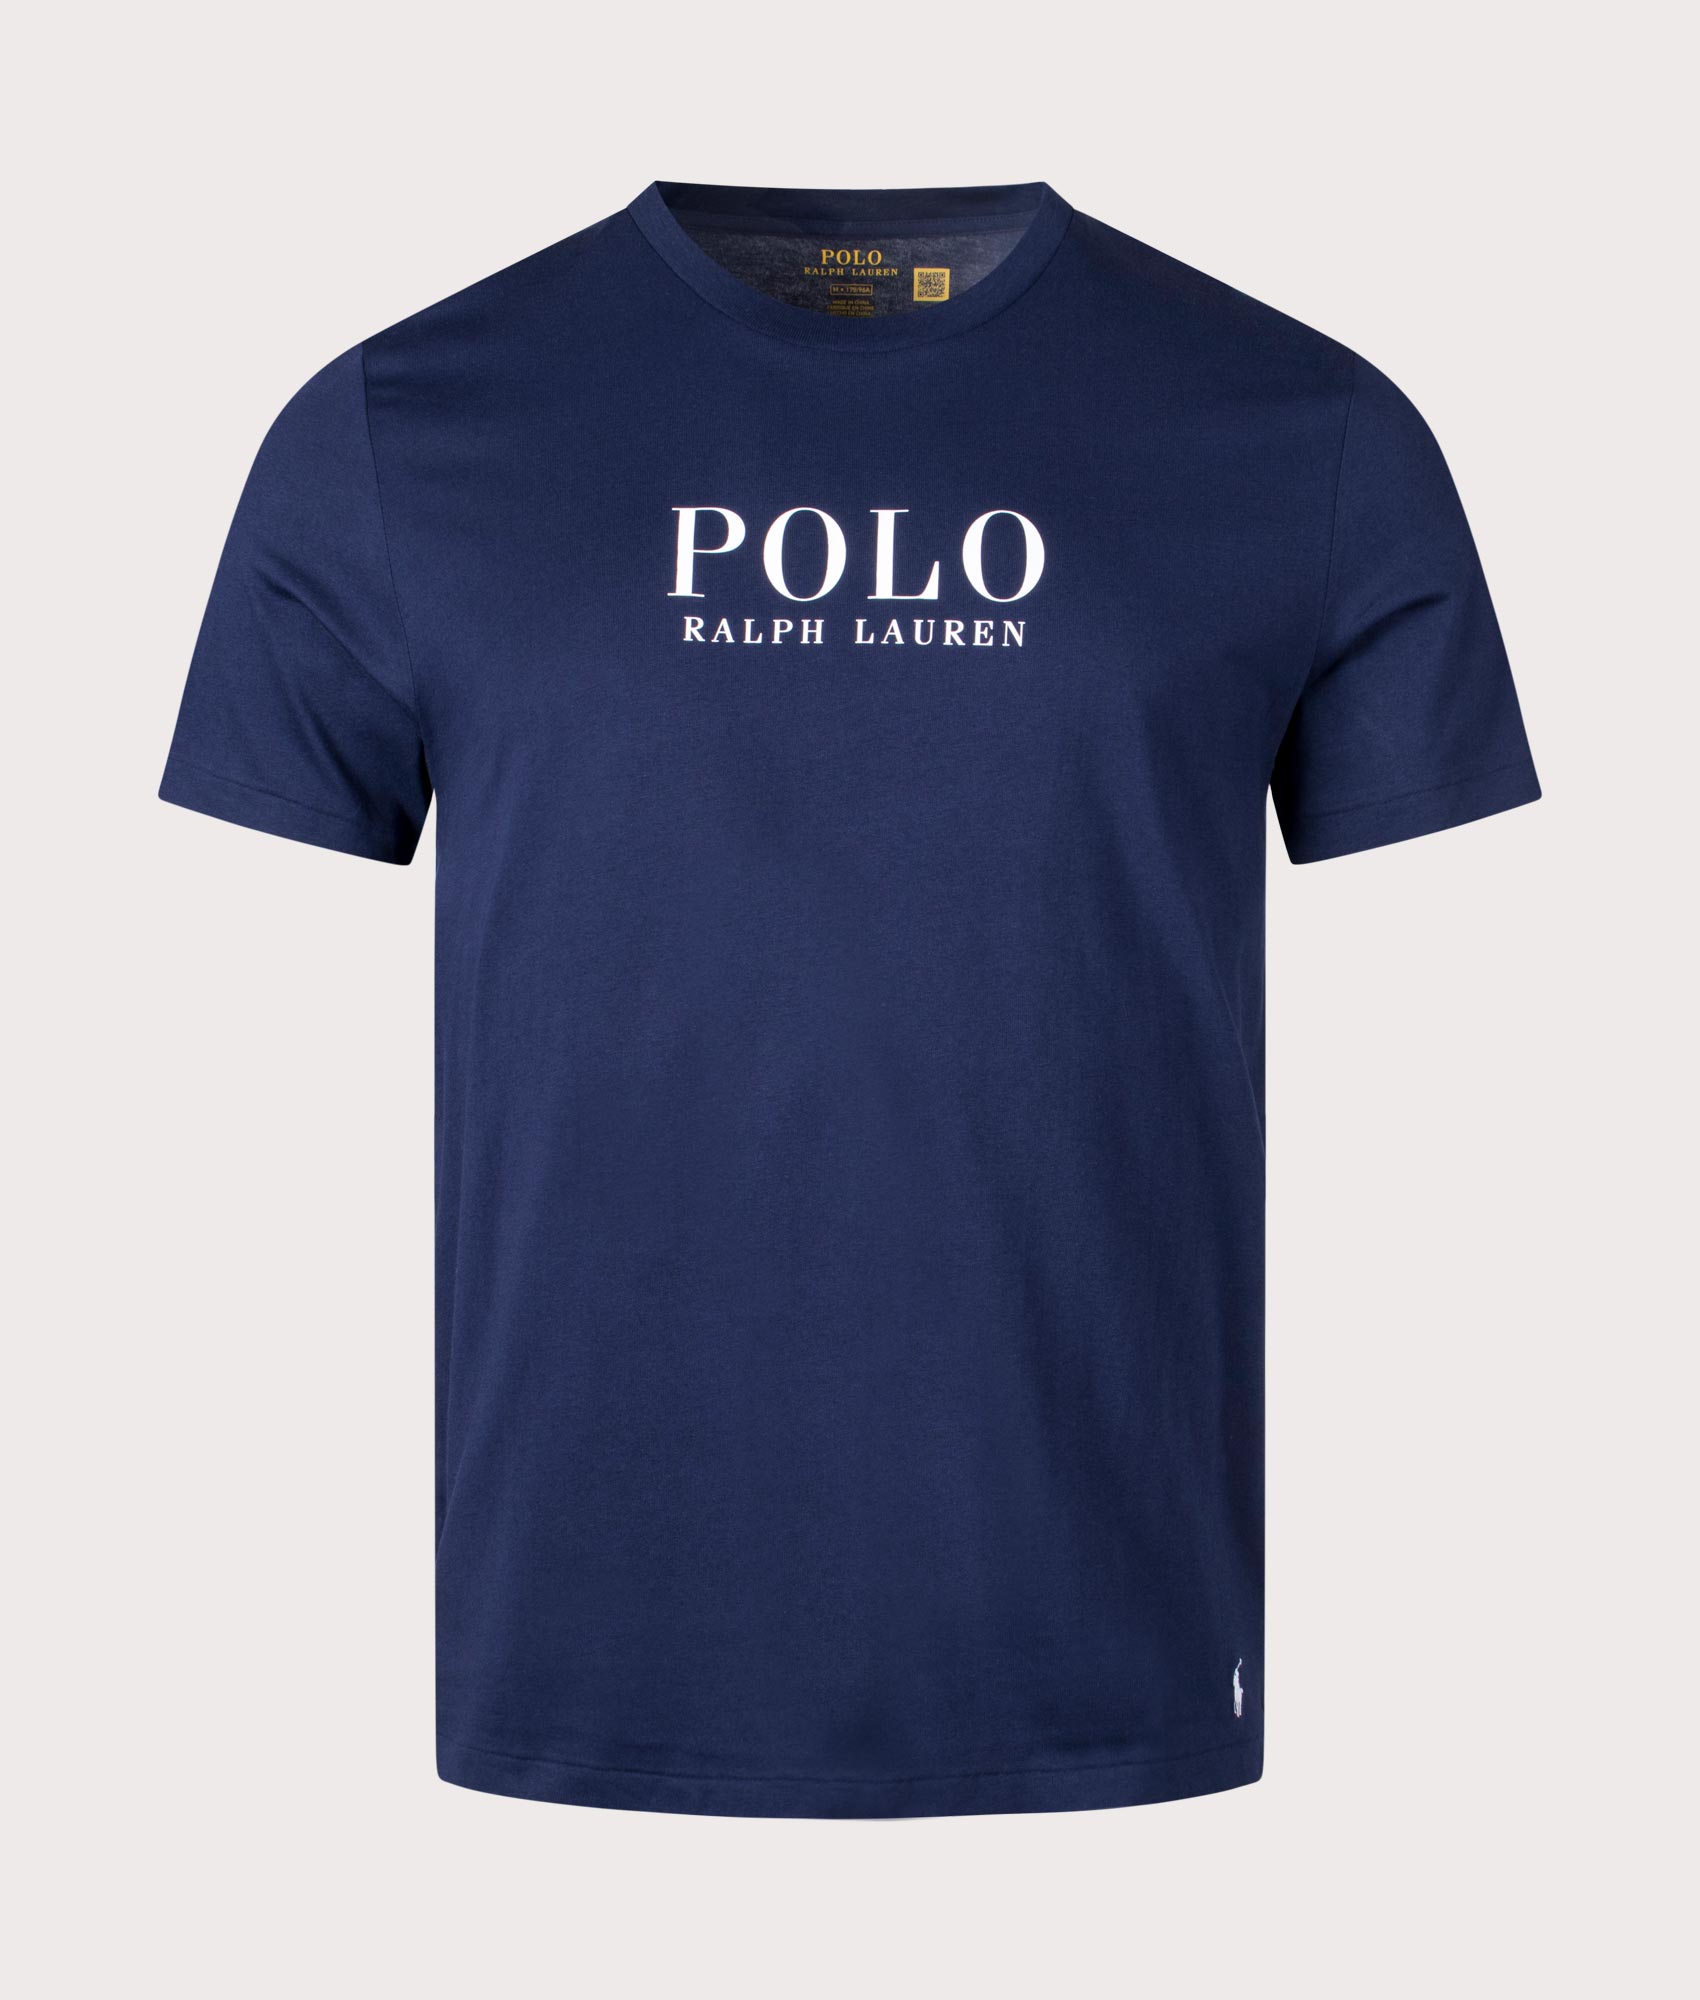 Polo Ralph Lauren Mens Lightweight Crew Neck T-Shirt - Colour: 003 Cruise Navy - Size: Large